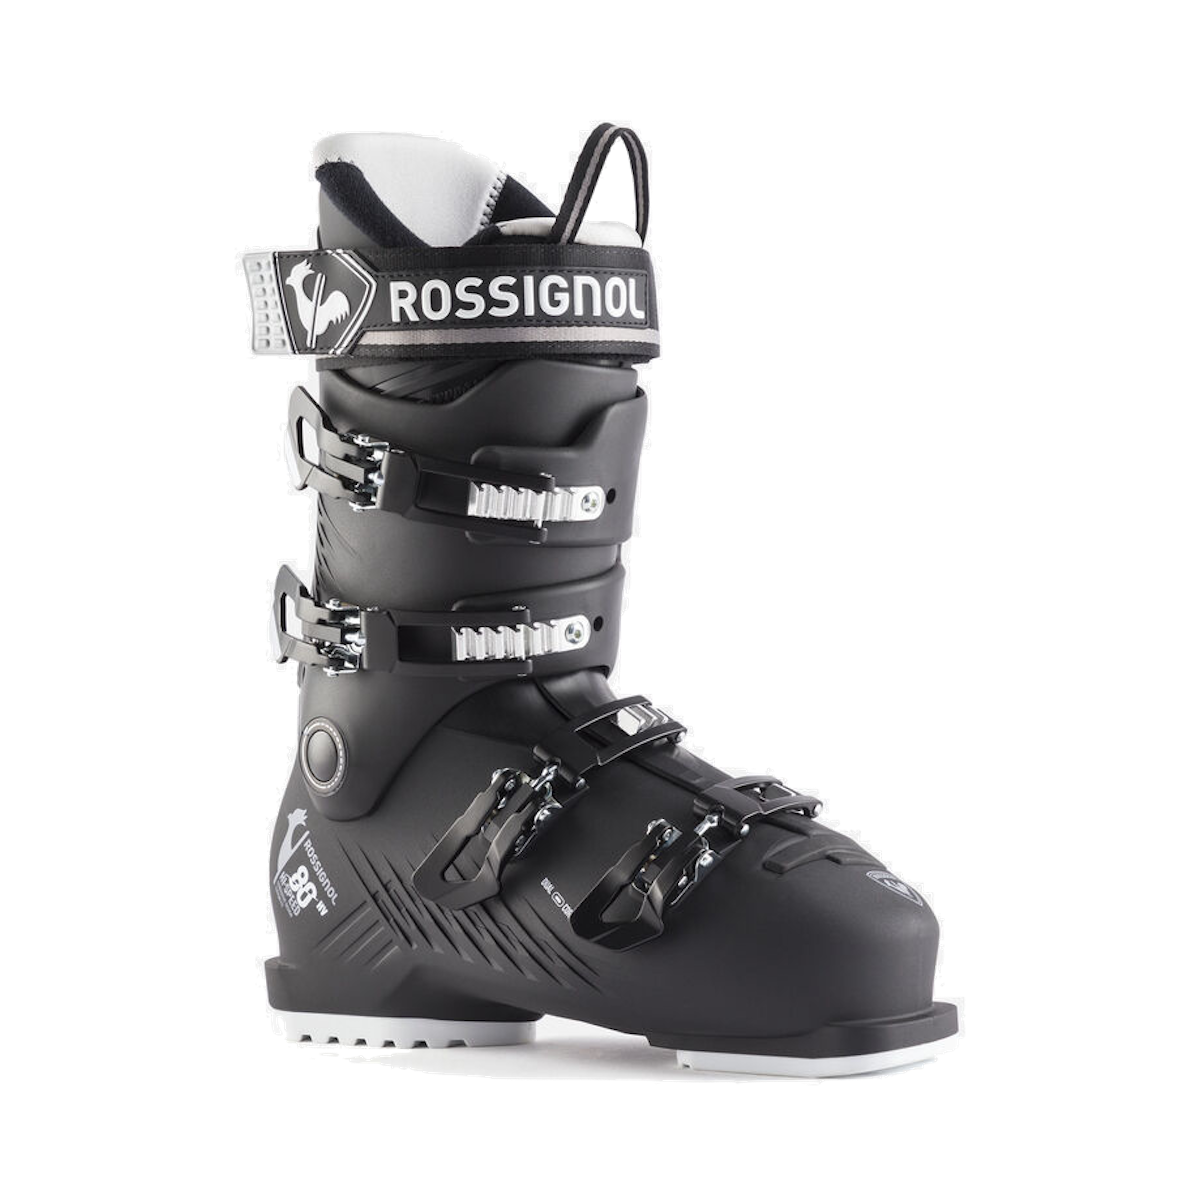 ROSSIGNOL HI-SPEED 80 HV alpine ski boots - black/silver